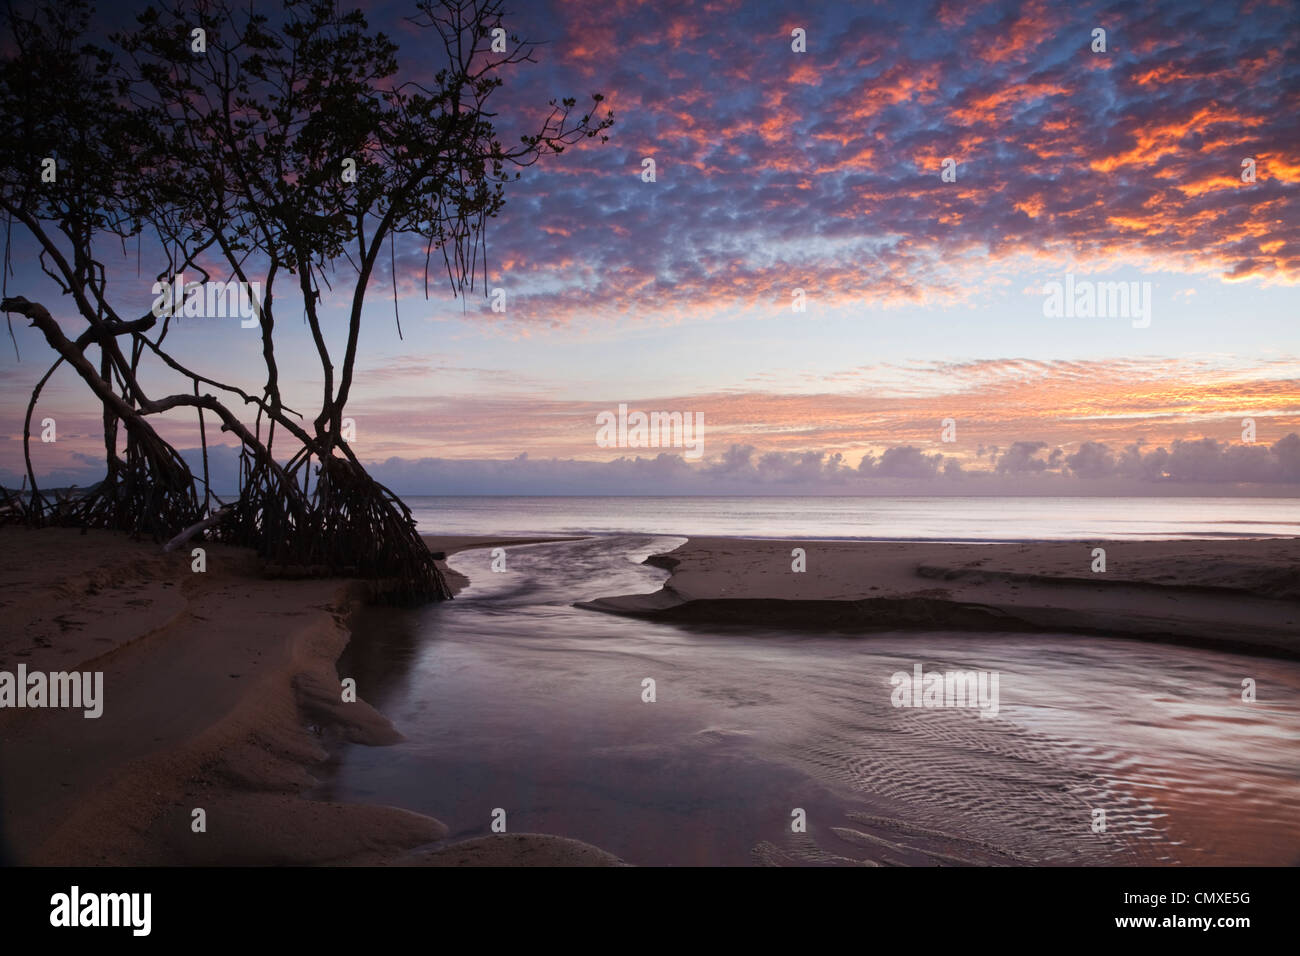 Árboles de mangle en la playa al amanecer. Kewarra Beach, Cairns, Queensland, Australia Foto de stock